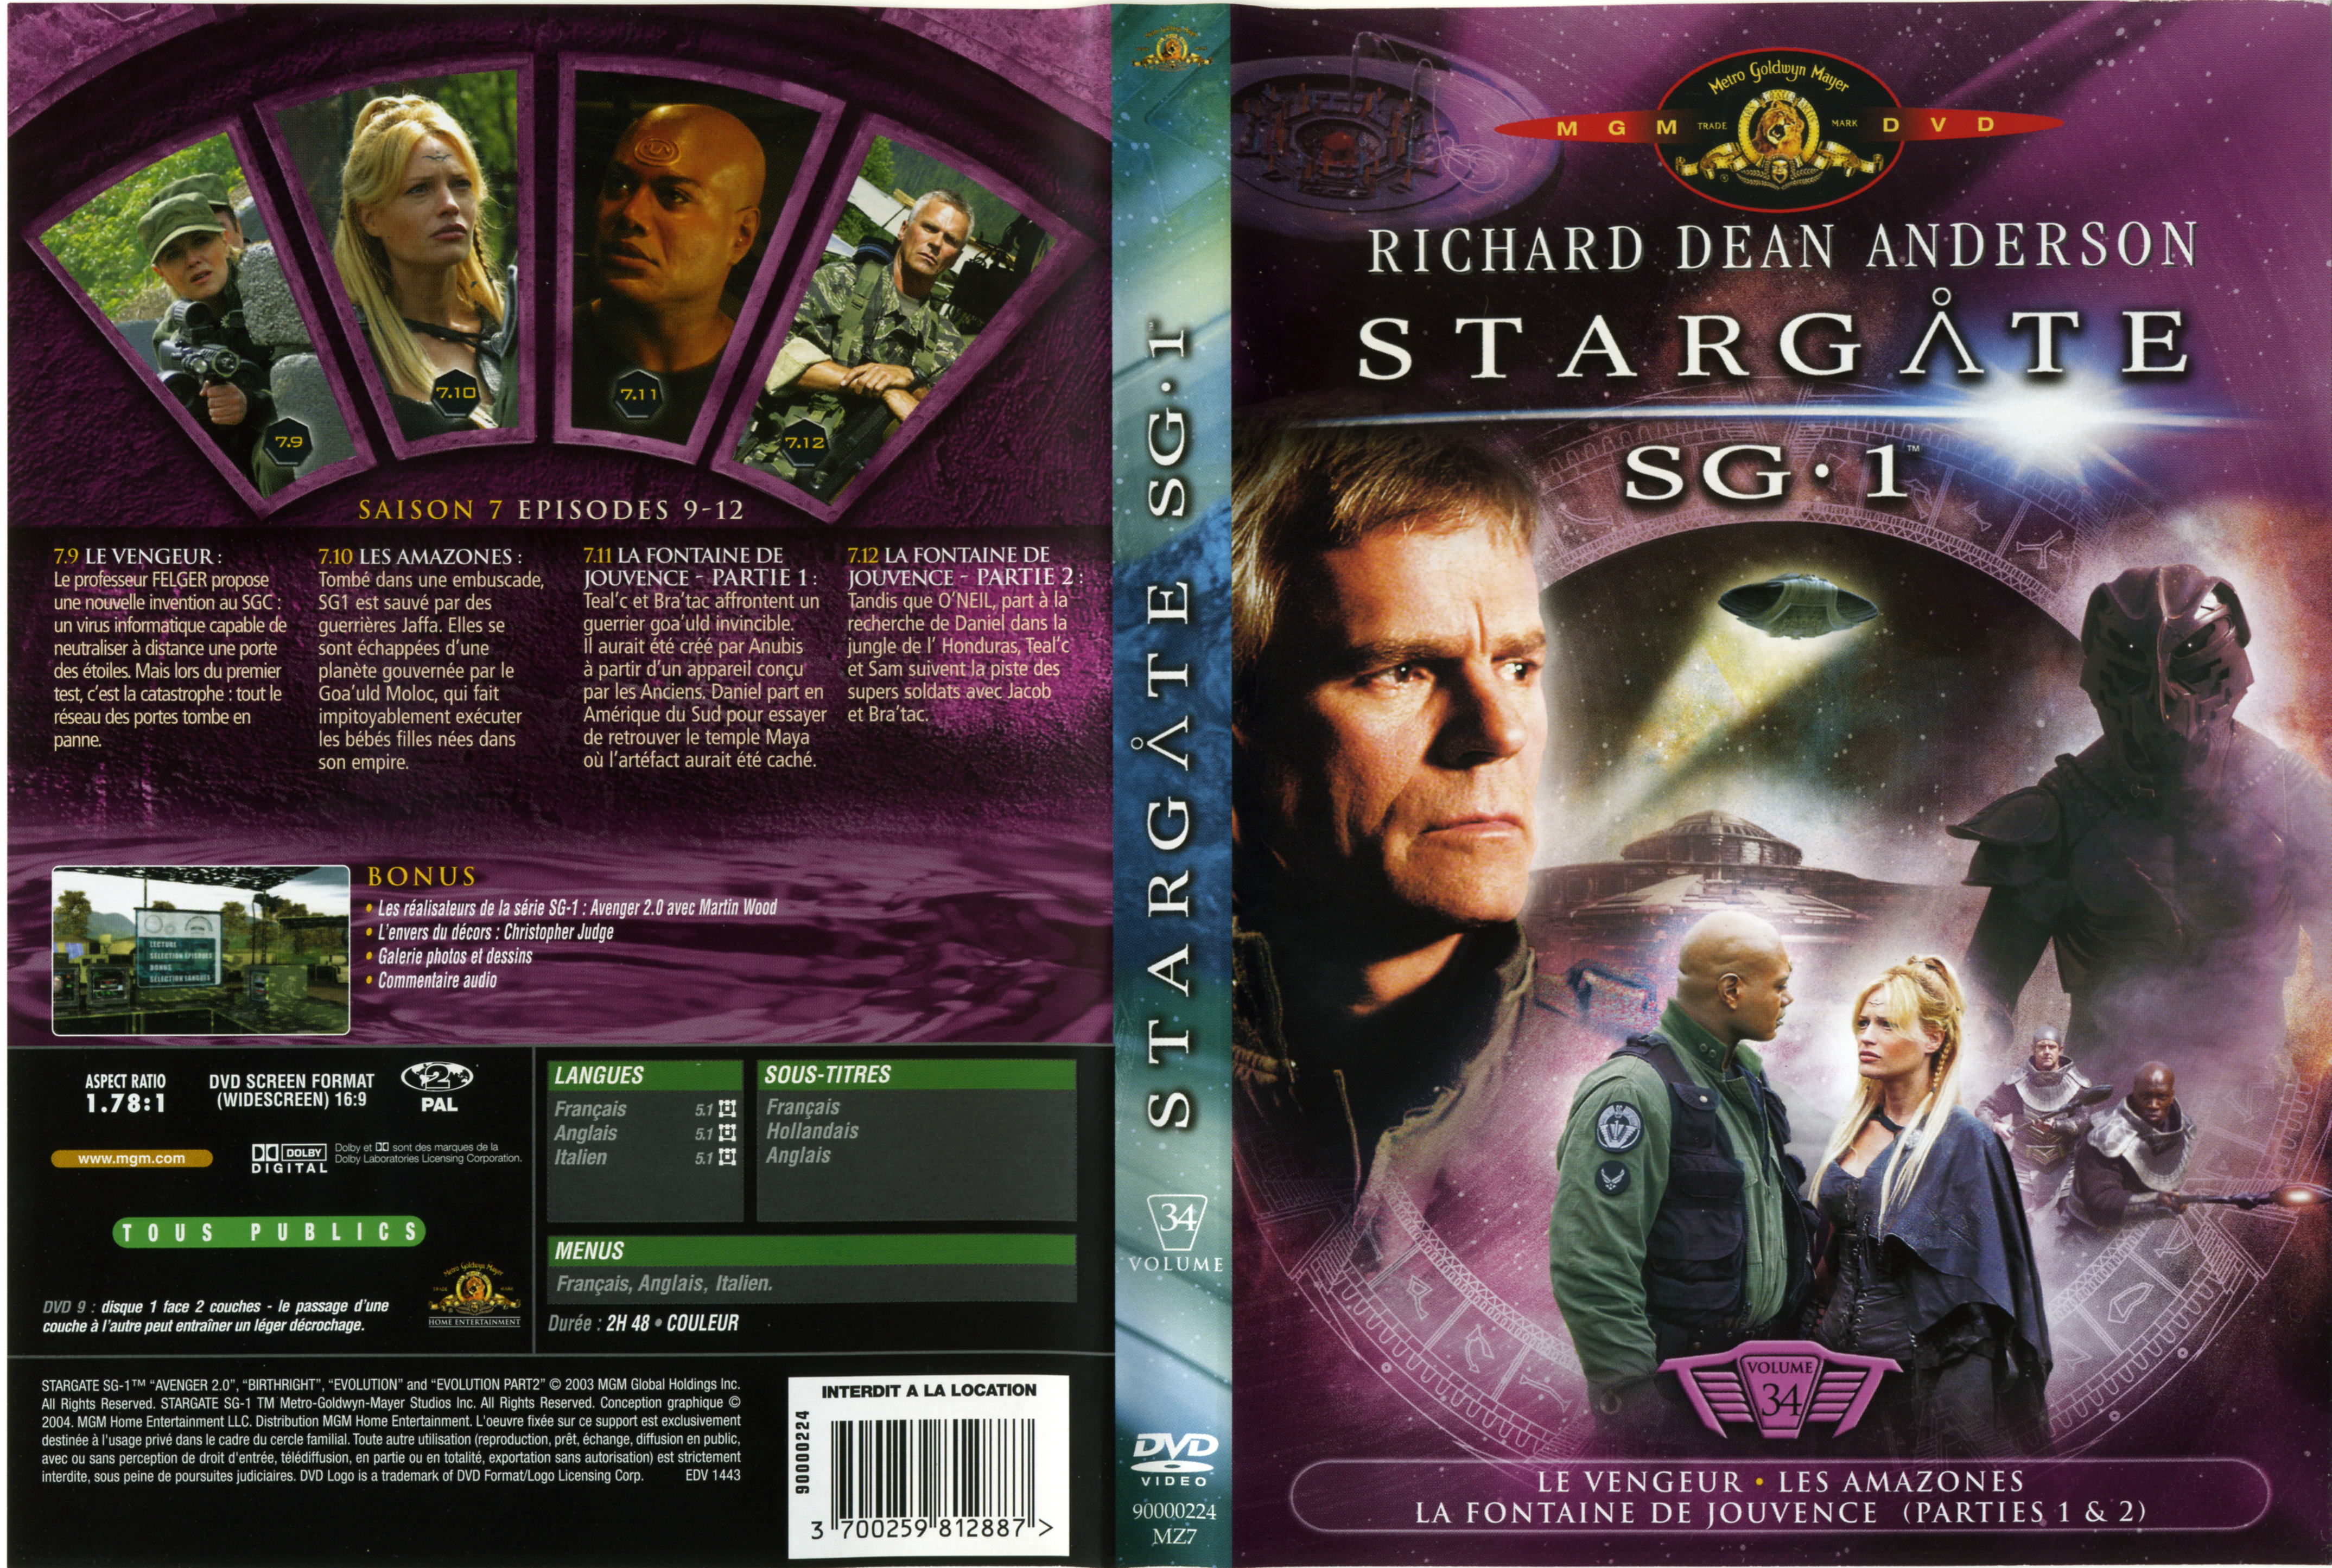 Jaquette DVD Stargate SG1 vol 34